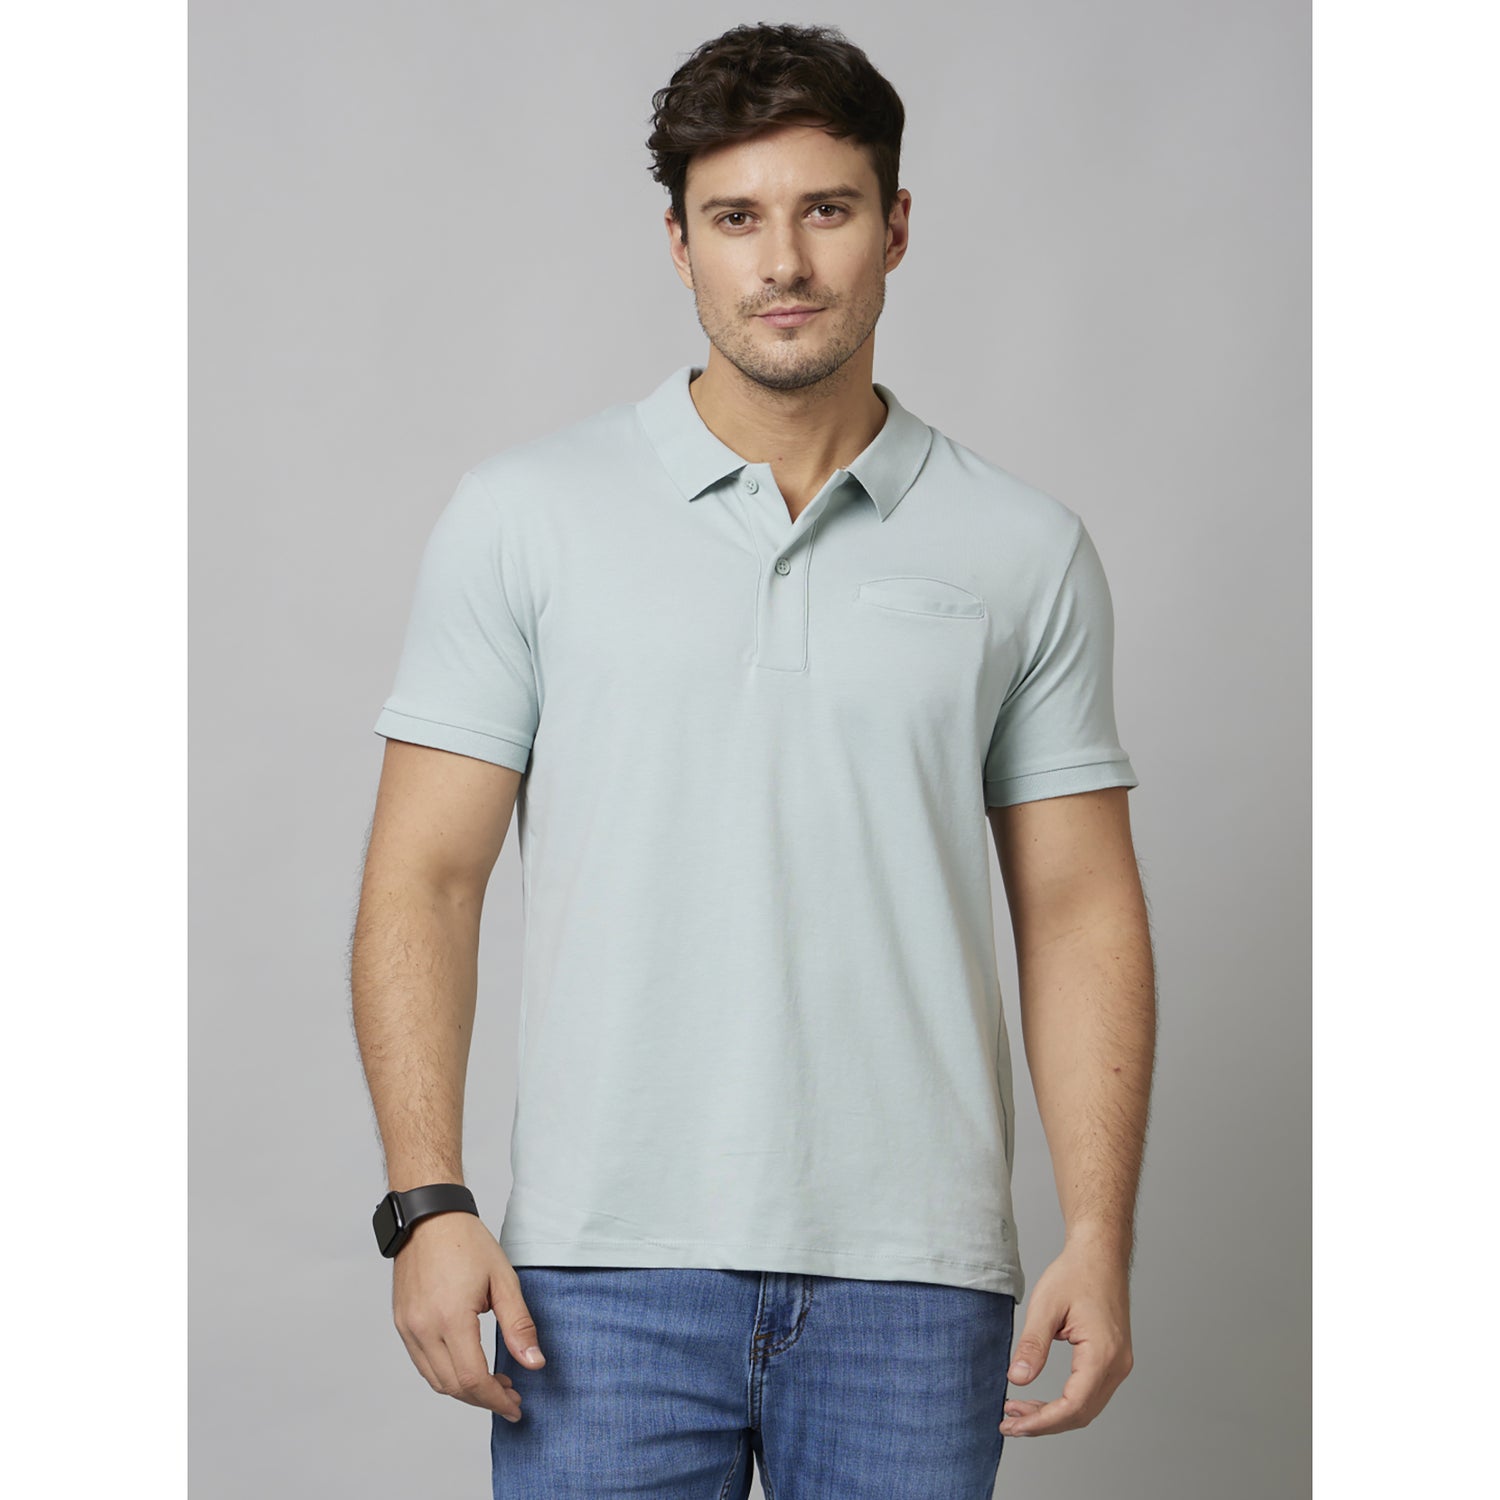 Blue Solid Short Sleeve Cotton Poly Blend T-Shirts (DECOULE)